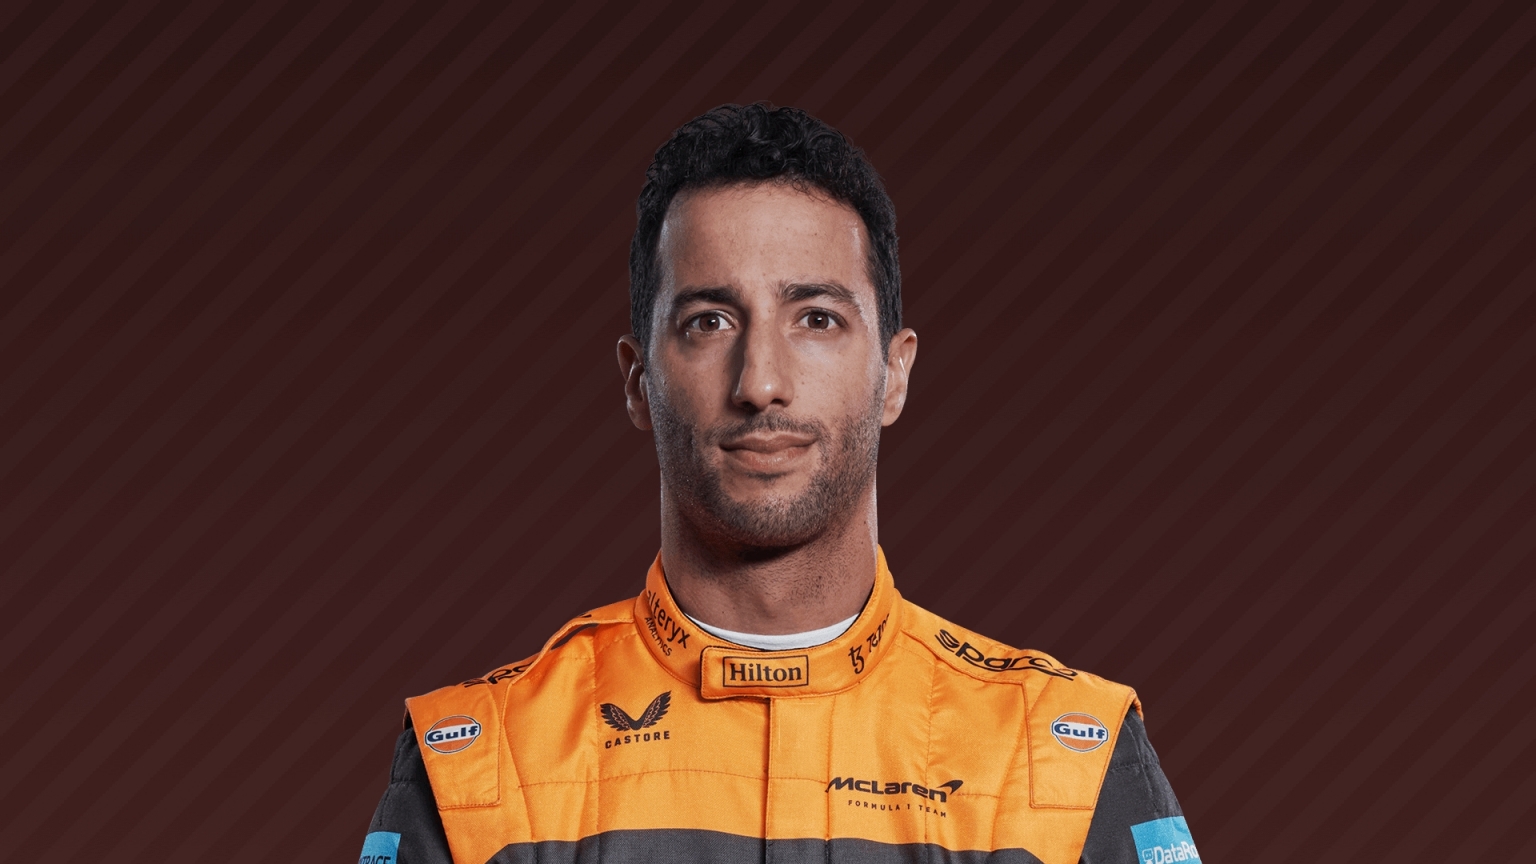 Daniel Ricciardo Car Collection: Cars Of Daniel Ricciardo - 21Motoring ...